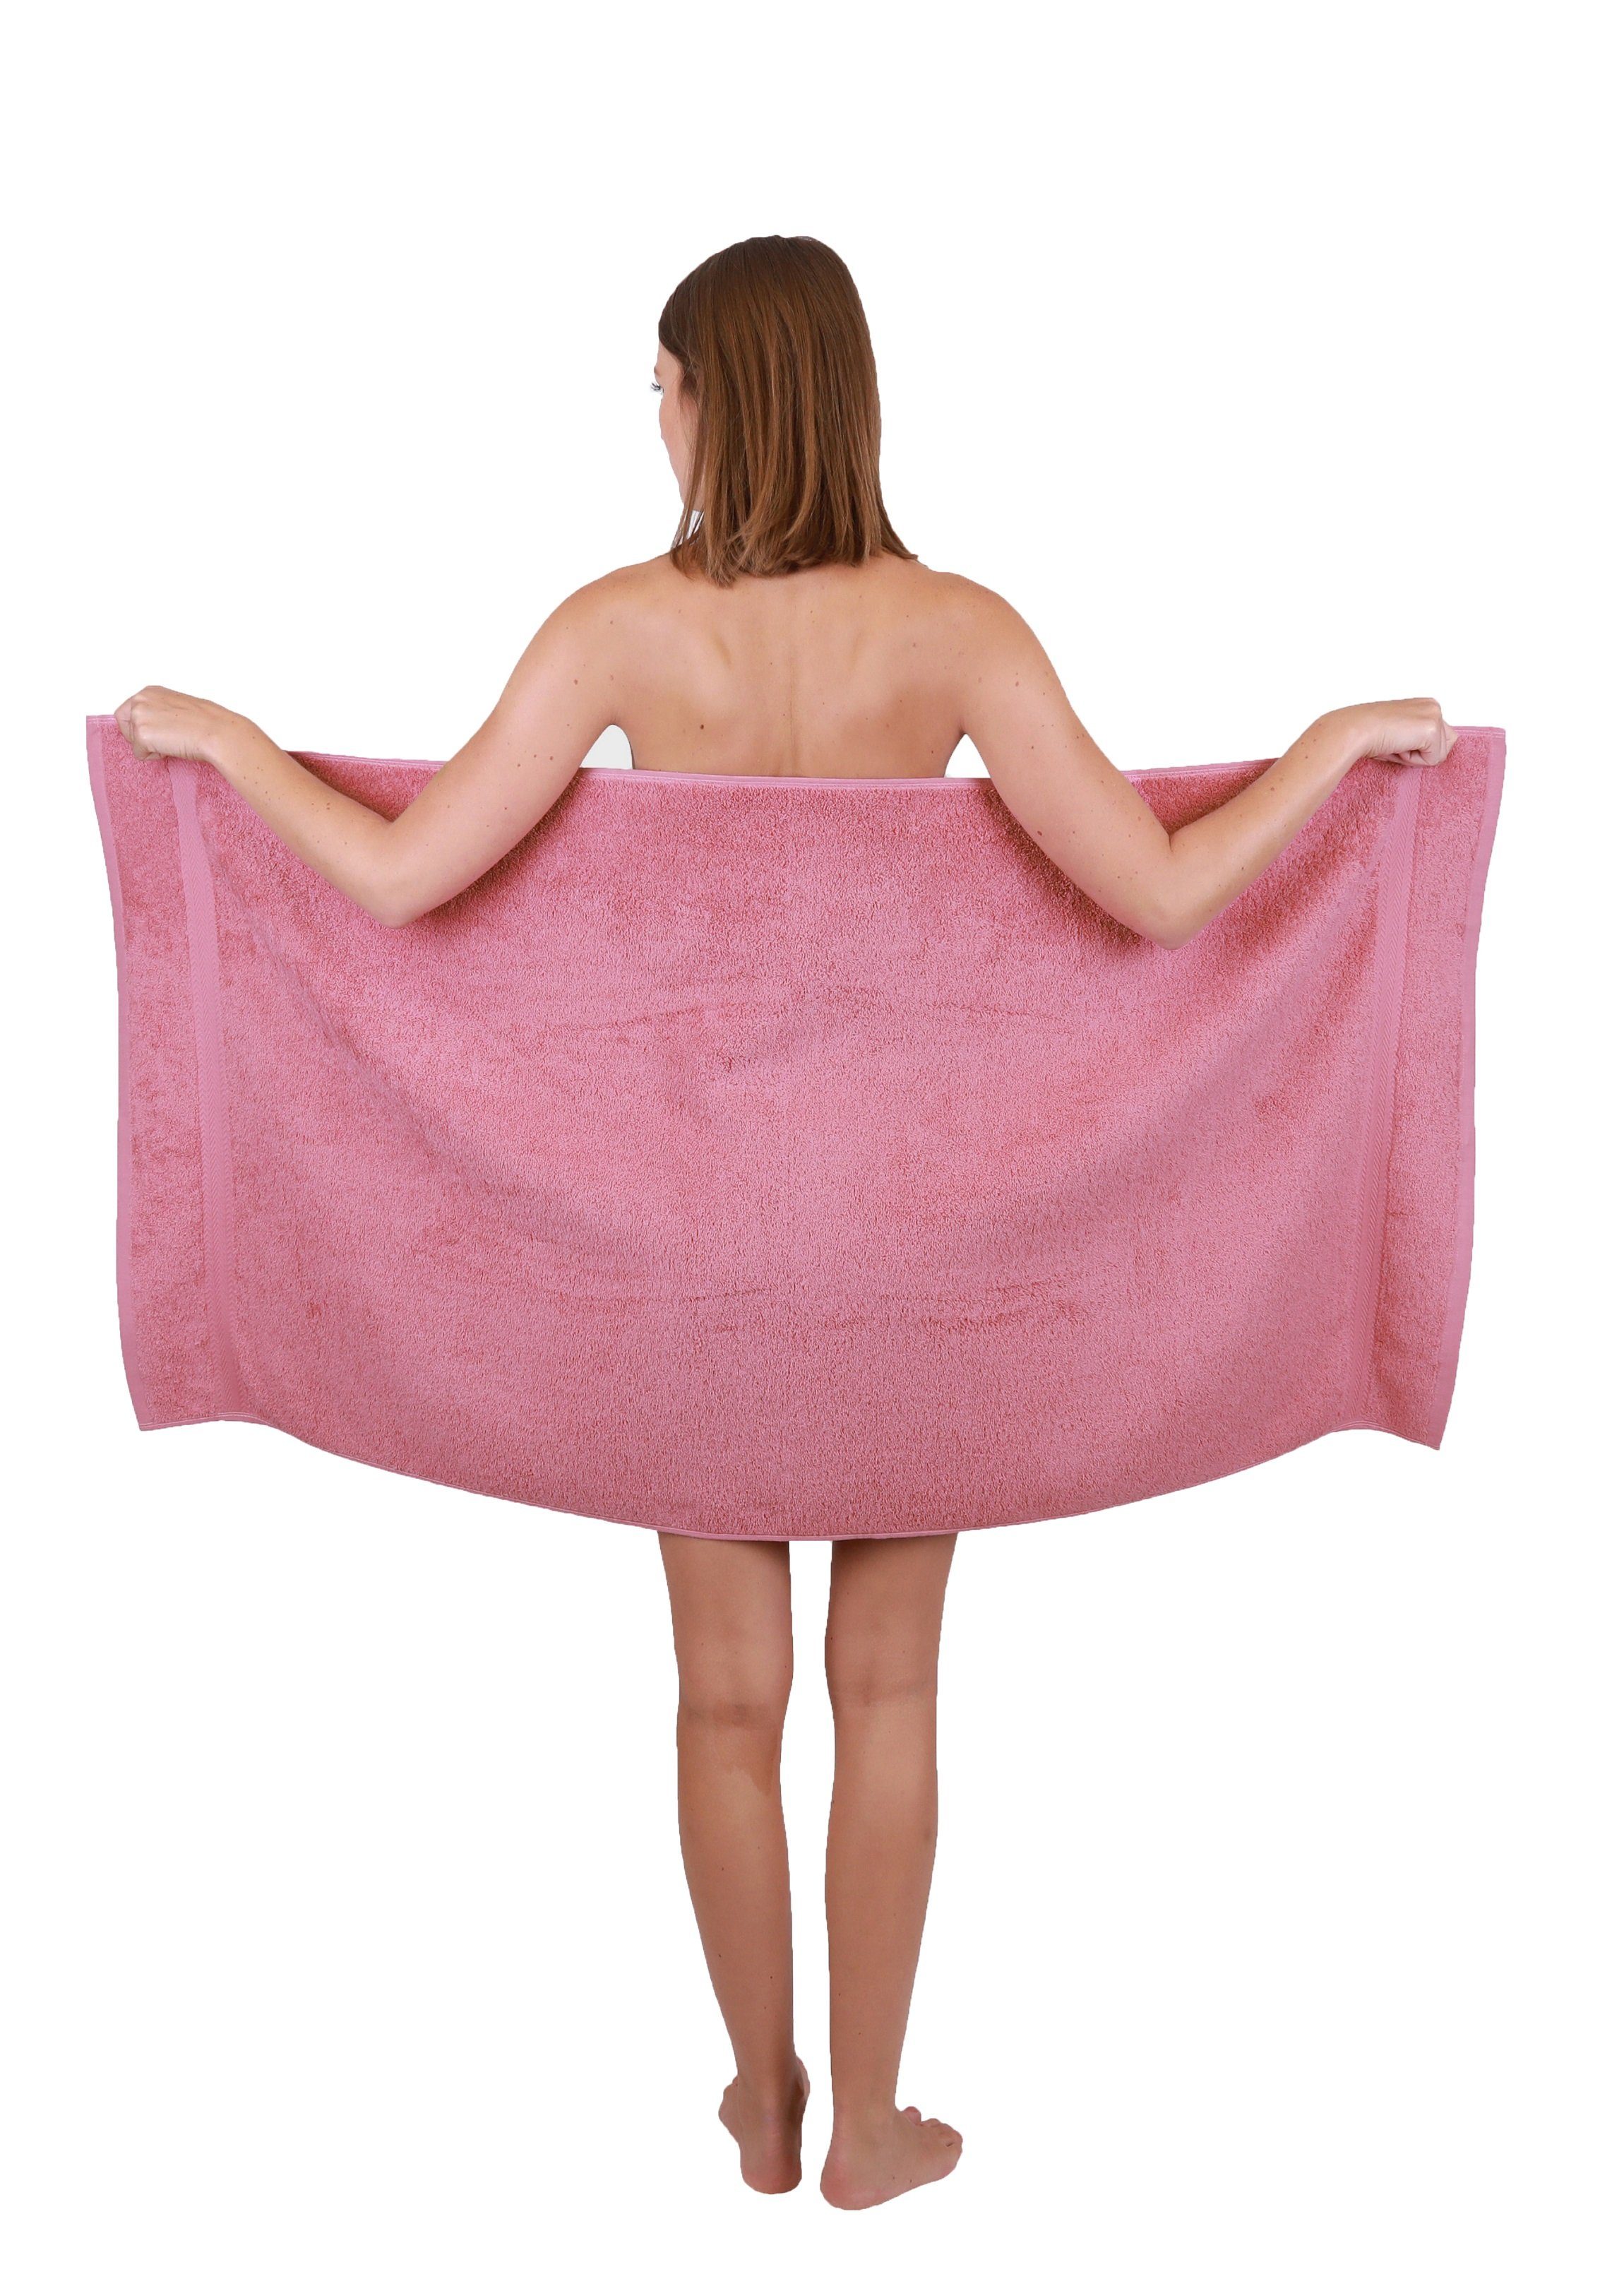 Set Handtuch-Set Altrosa, Farbe 10-TLG. Baumwolle, Rot & 100% Premium (10-tlg) Handtuch Betz